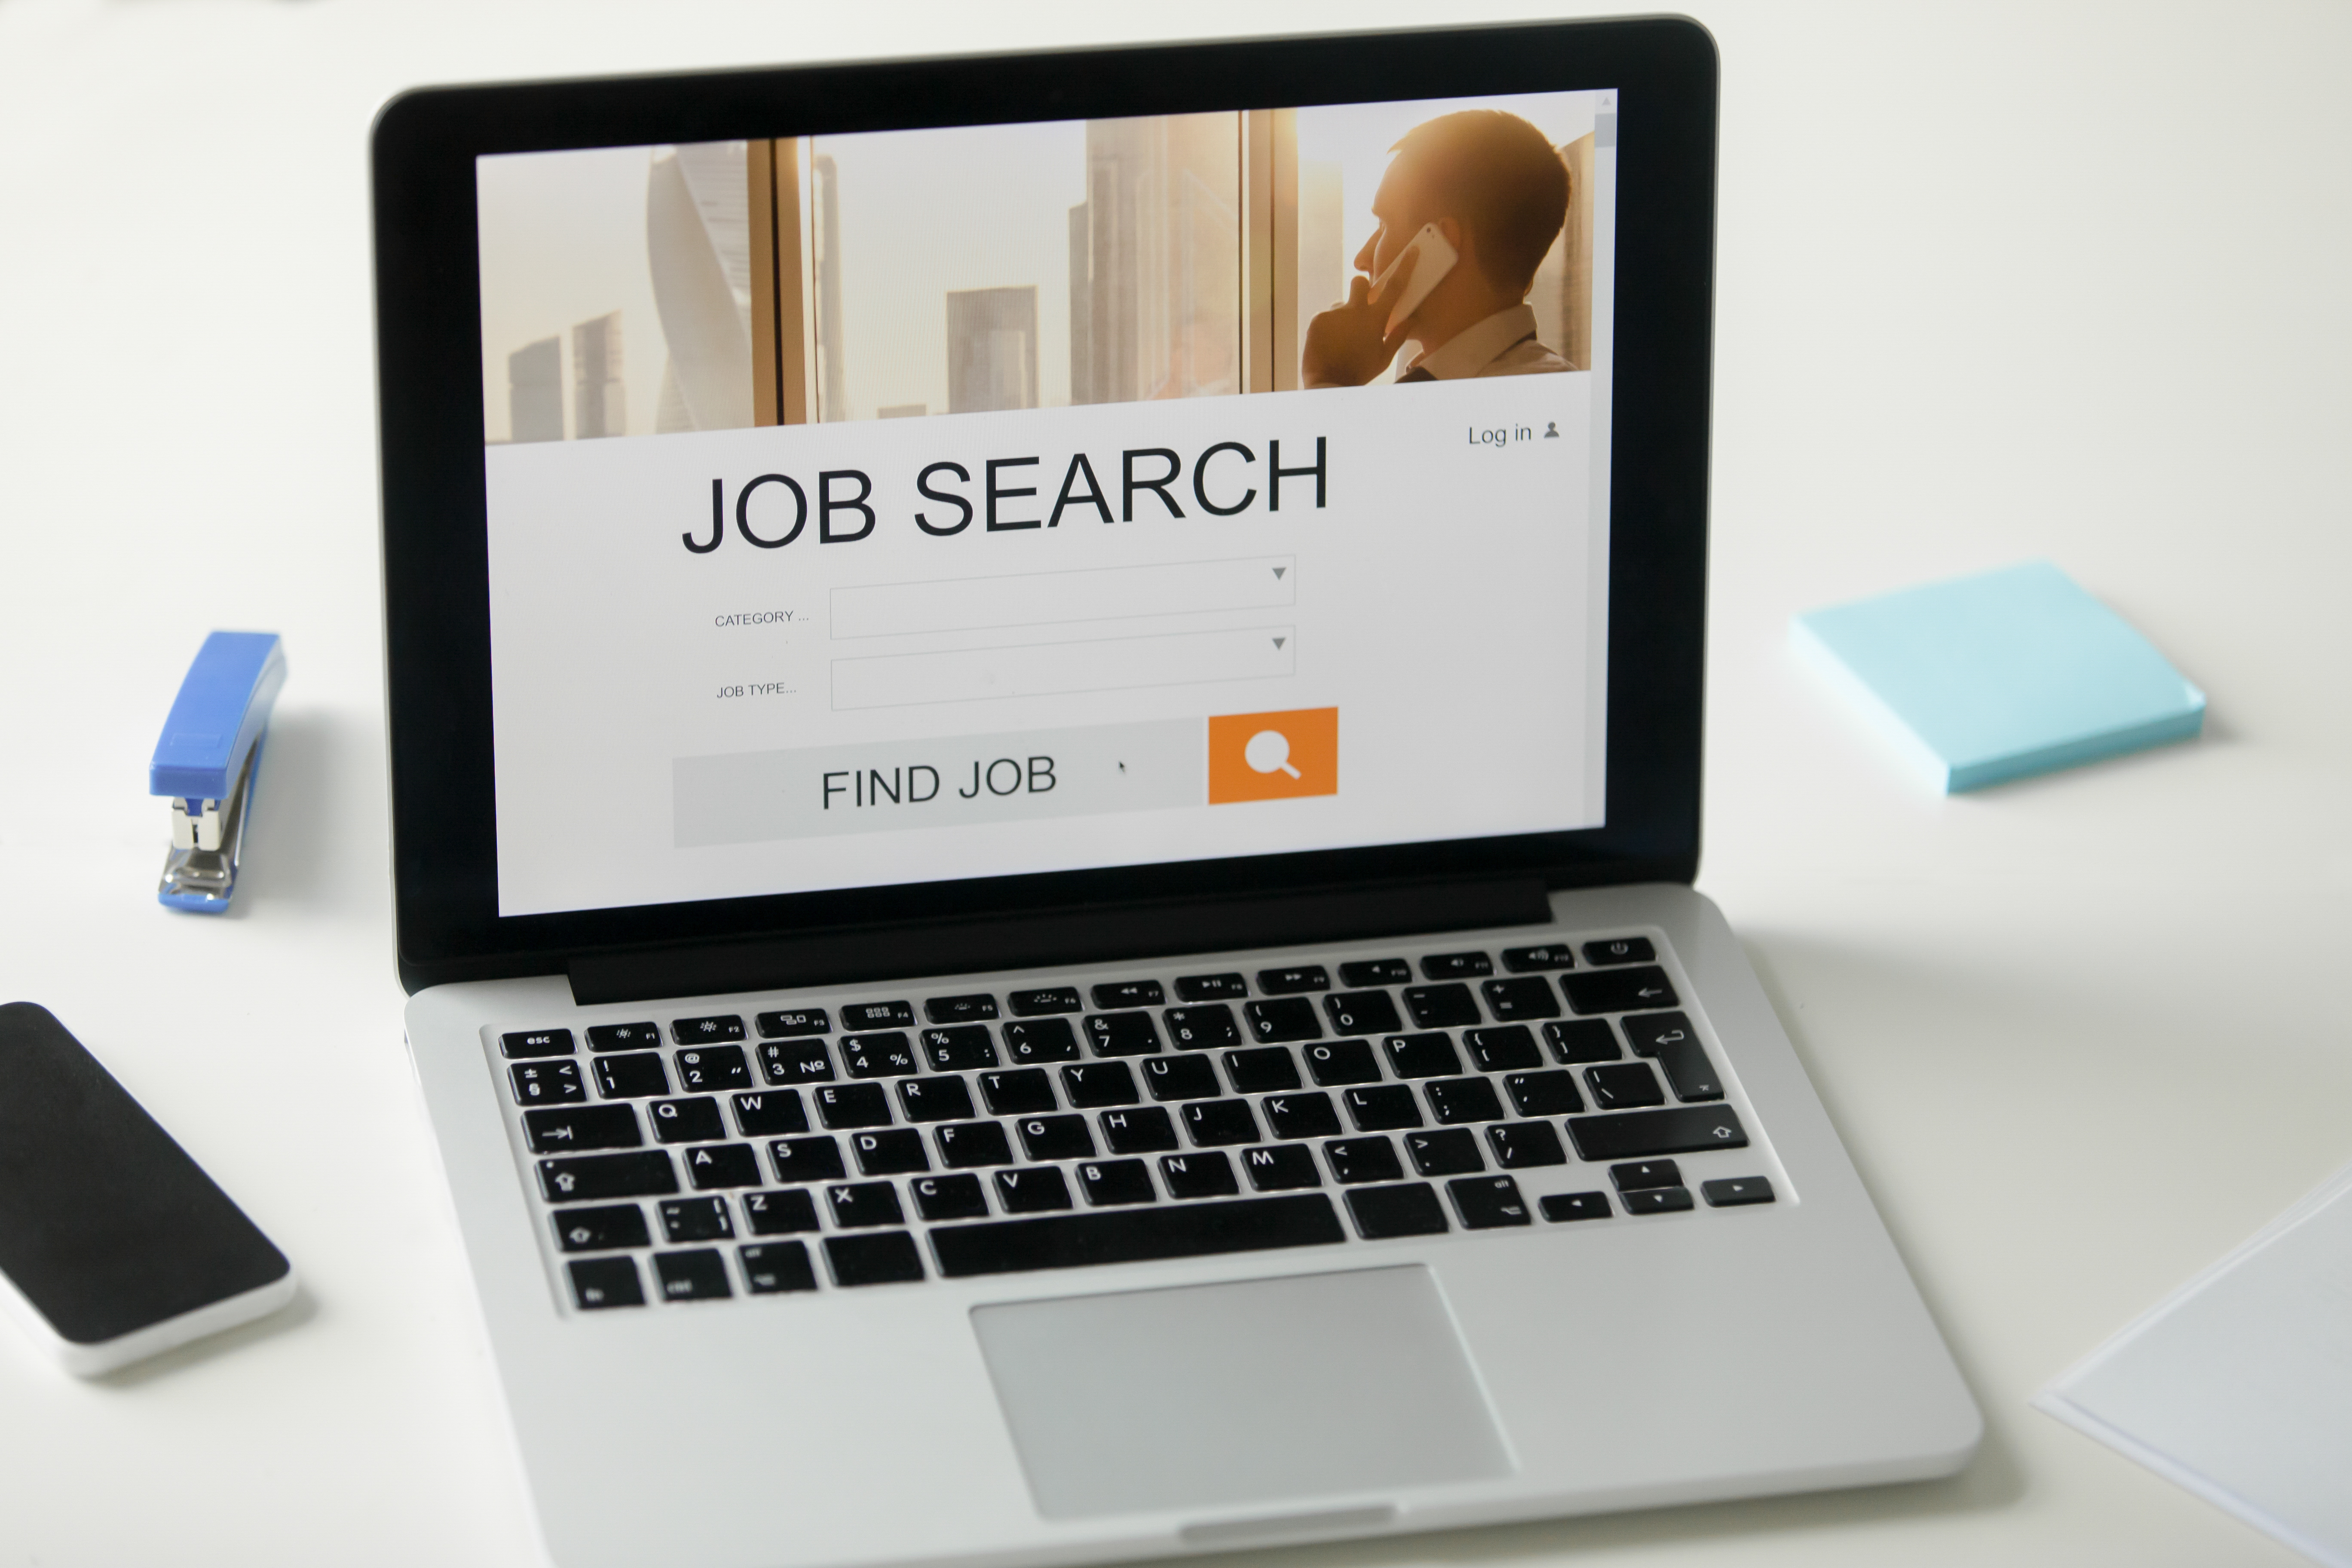  job search title on screen